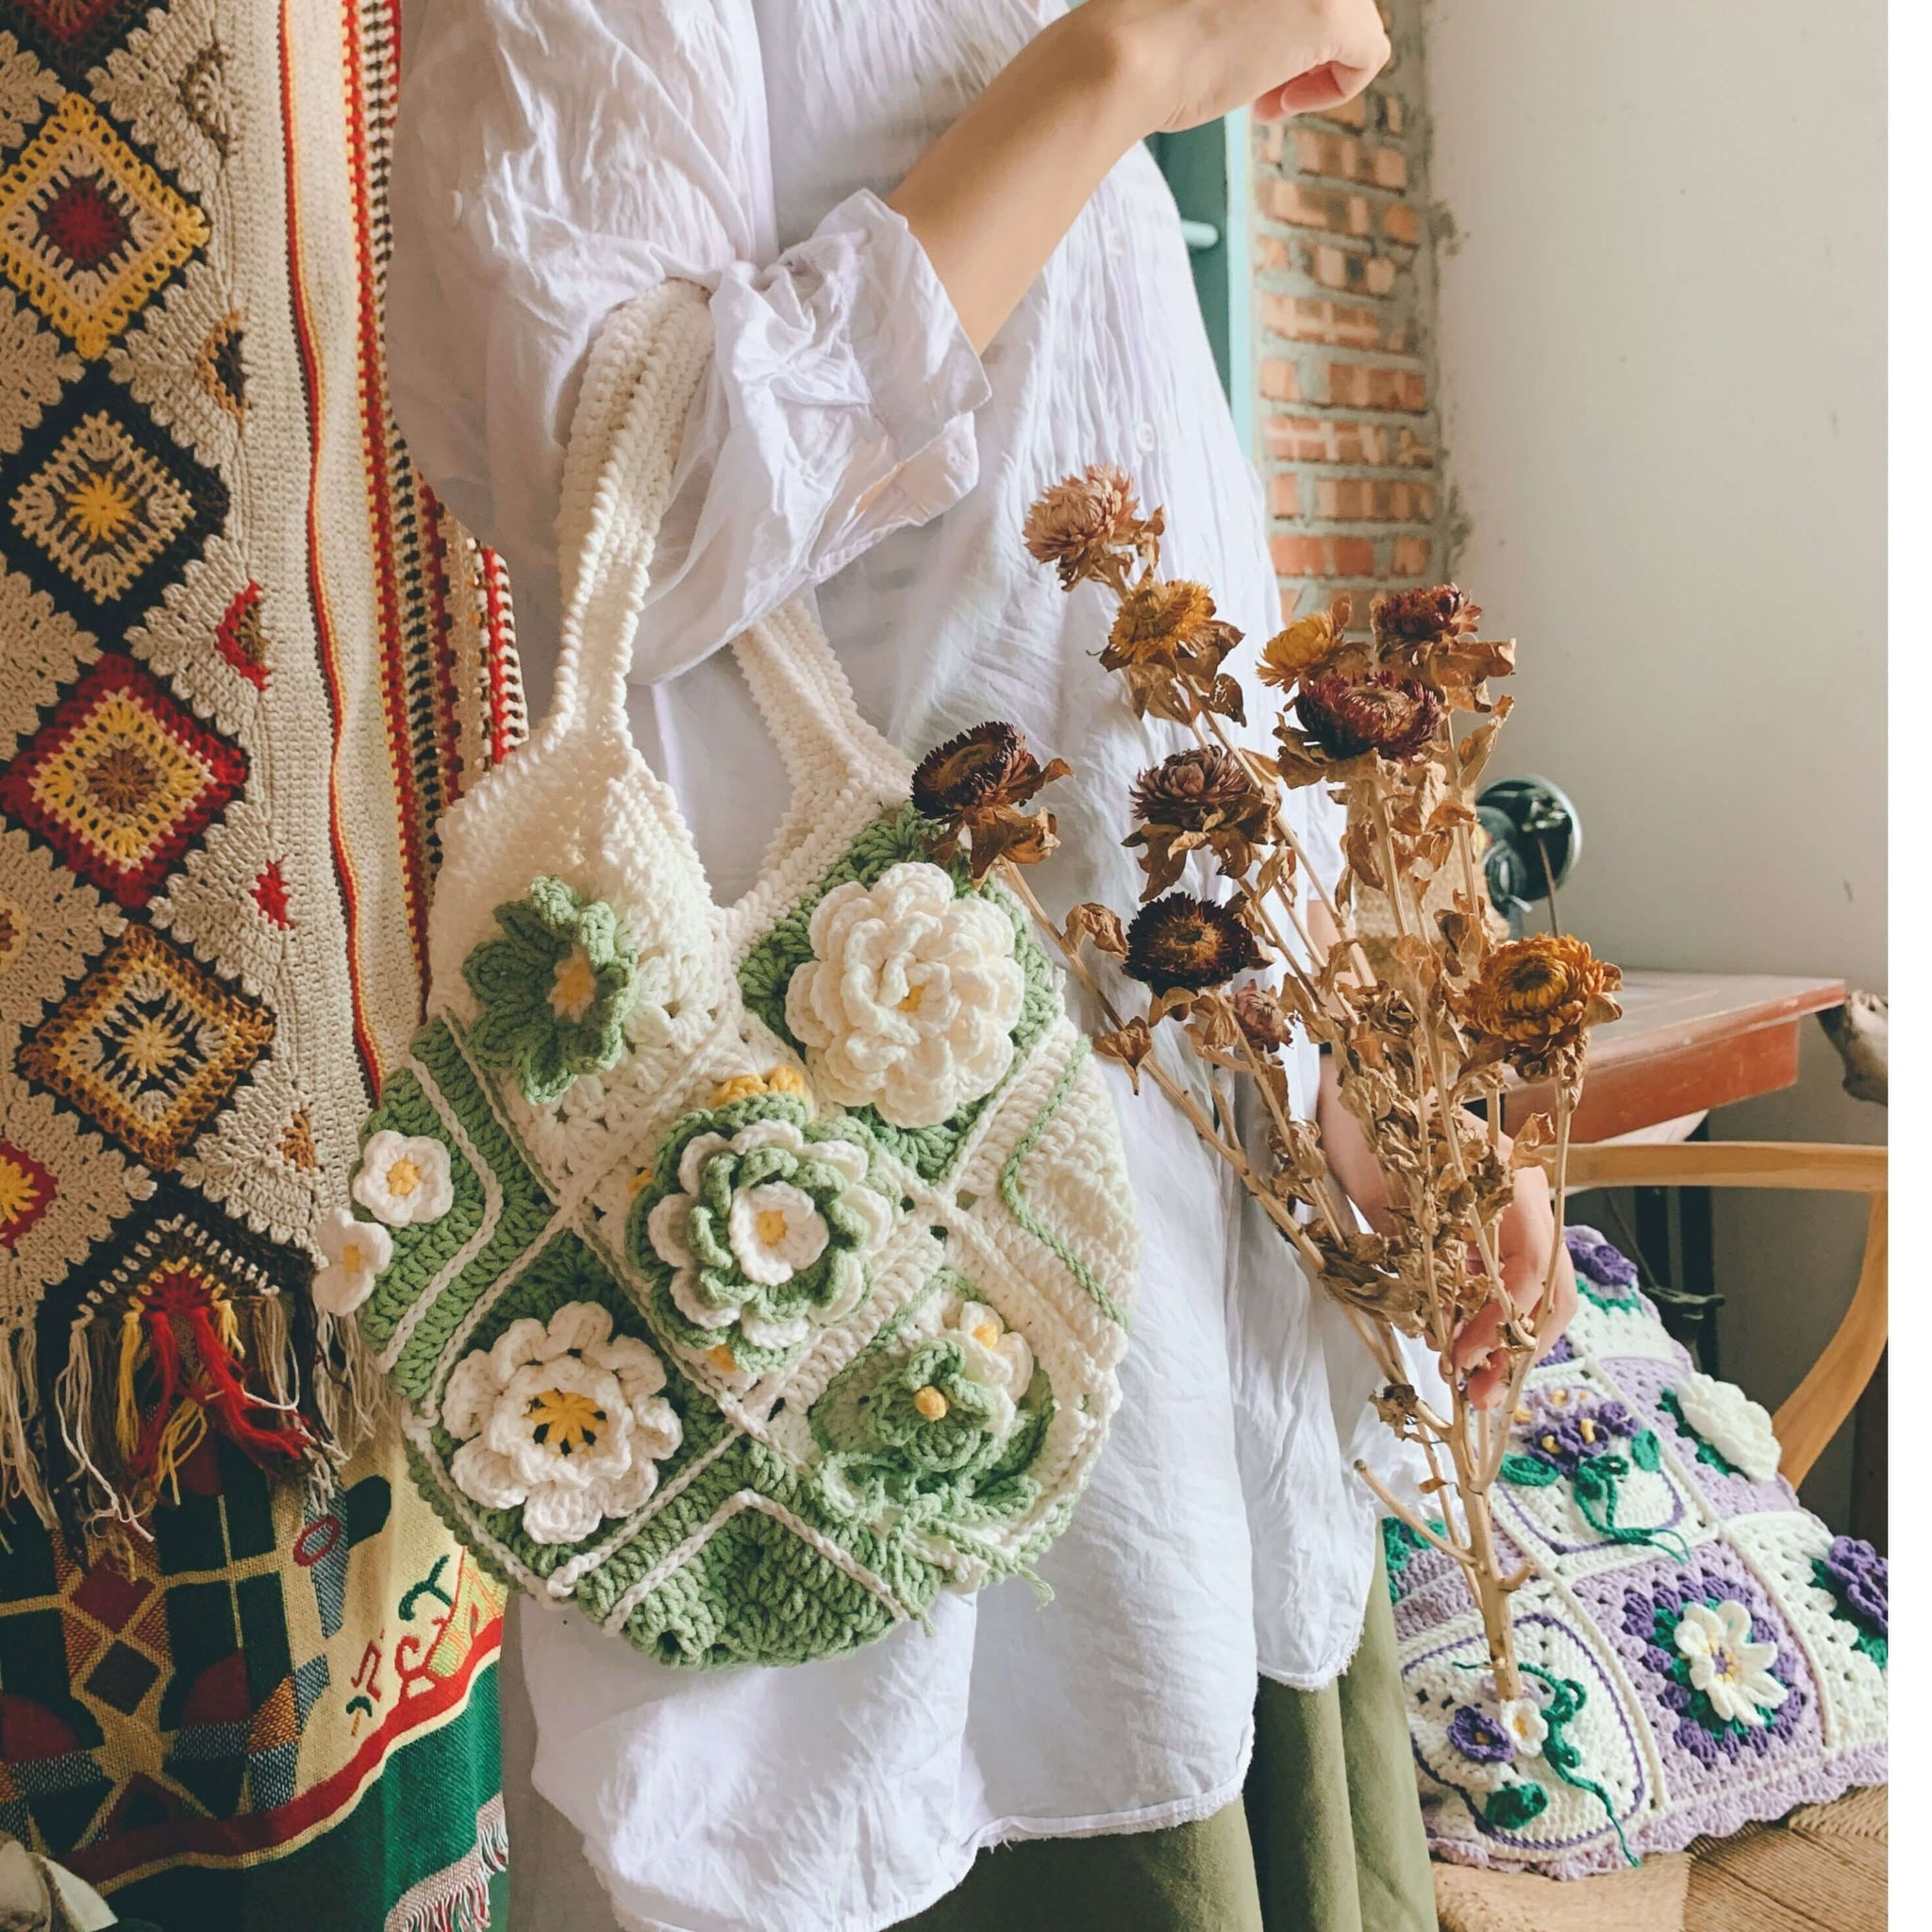 Flower Design Bag Charm Crochet For Bag Decoration Bag Accessories